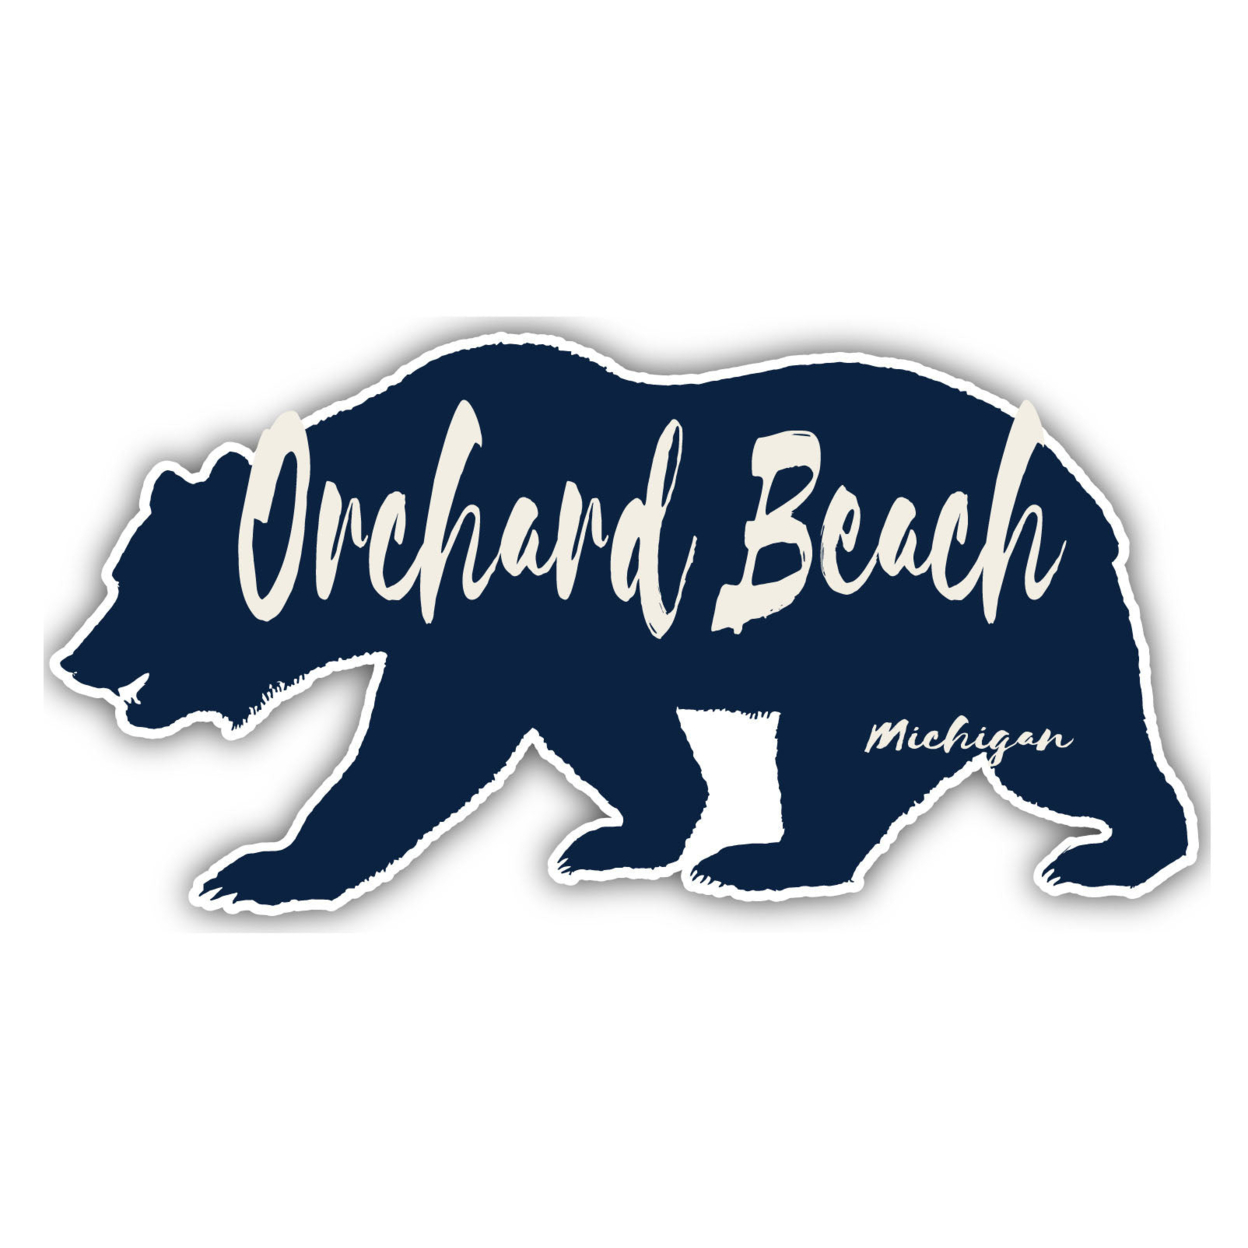 Orchard Beach Michigan Souvenir Decorative Stickers (Choose Theme And Size) - Single Unit, 2-Inch, Bear